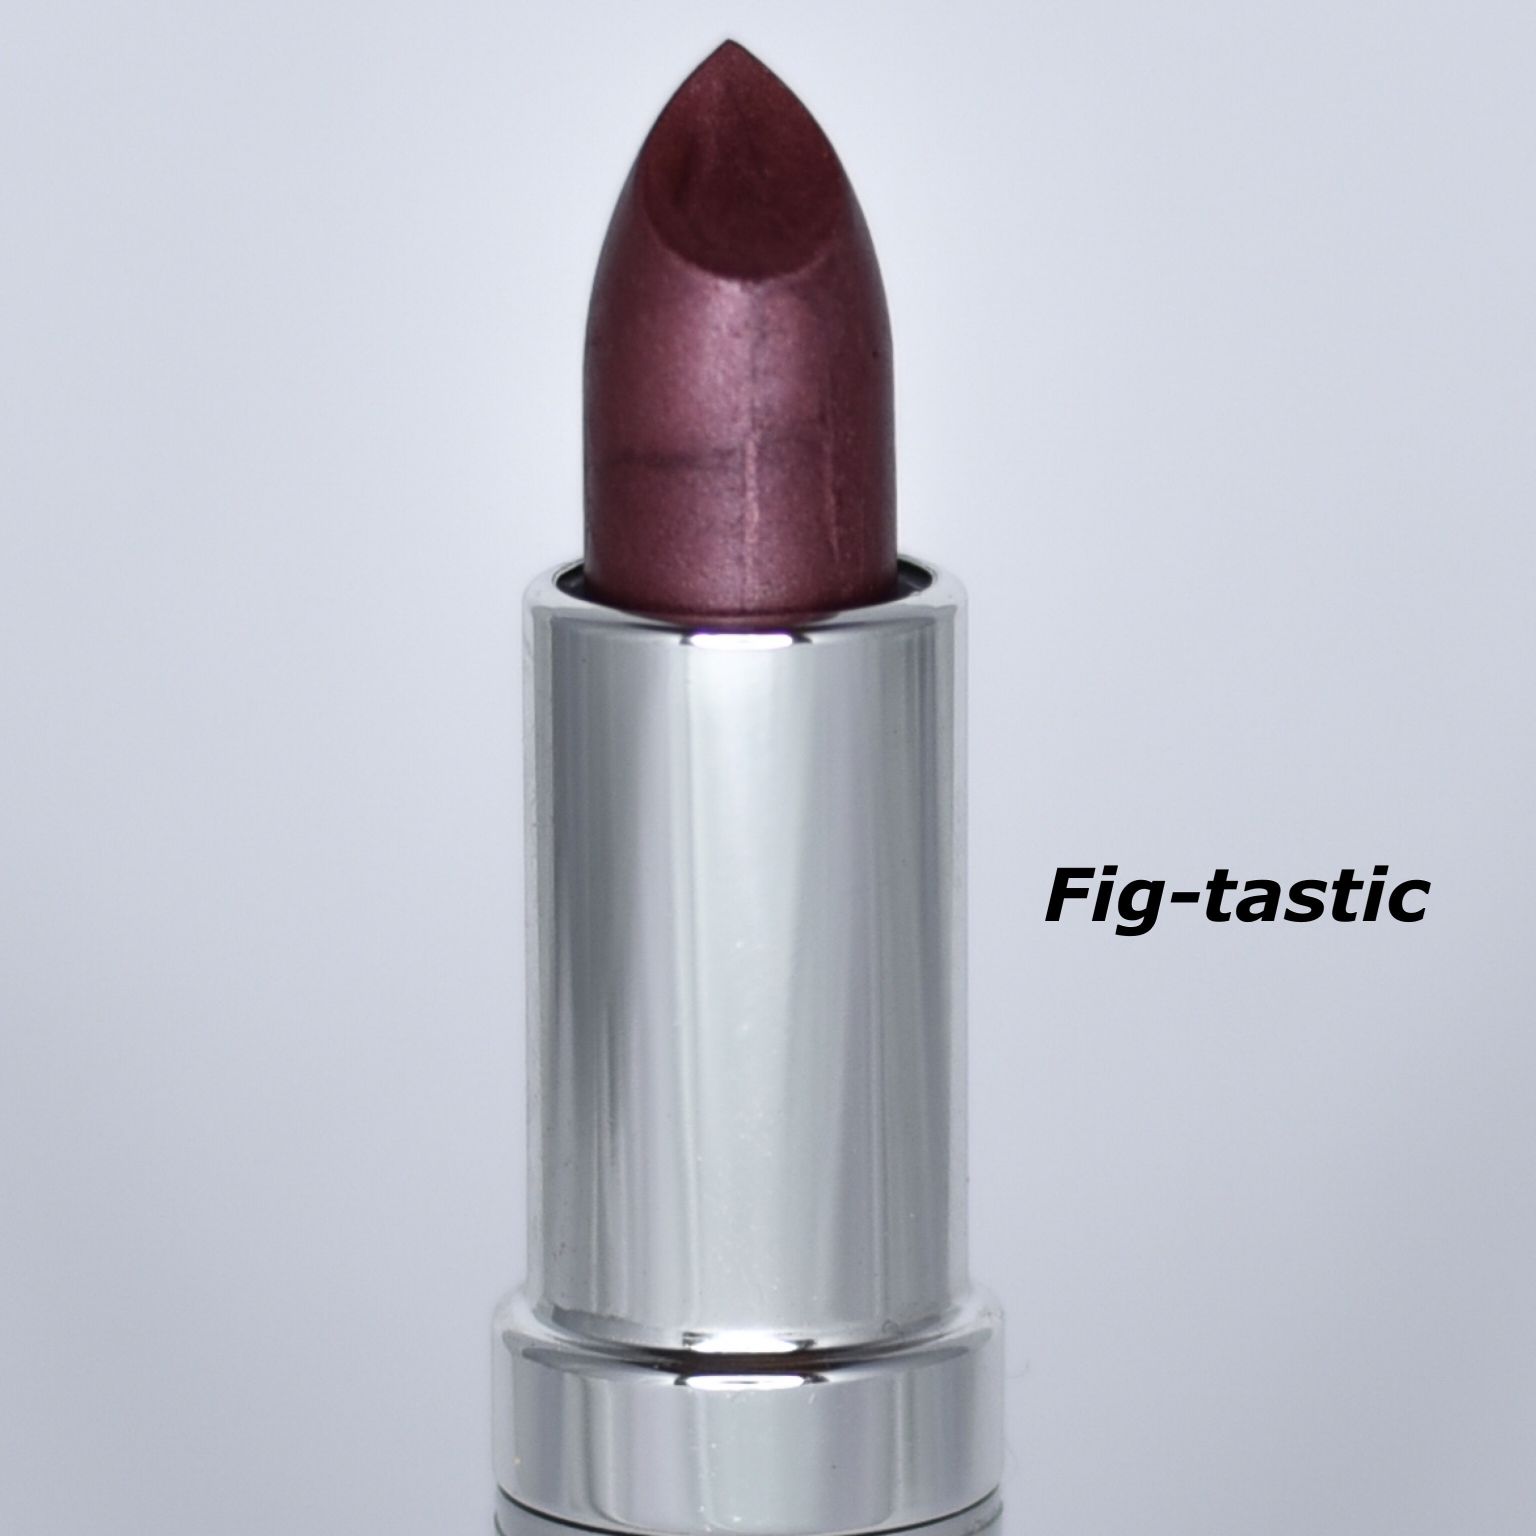 fig-tastic dark Lipstick